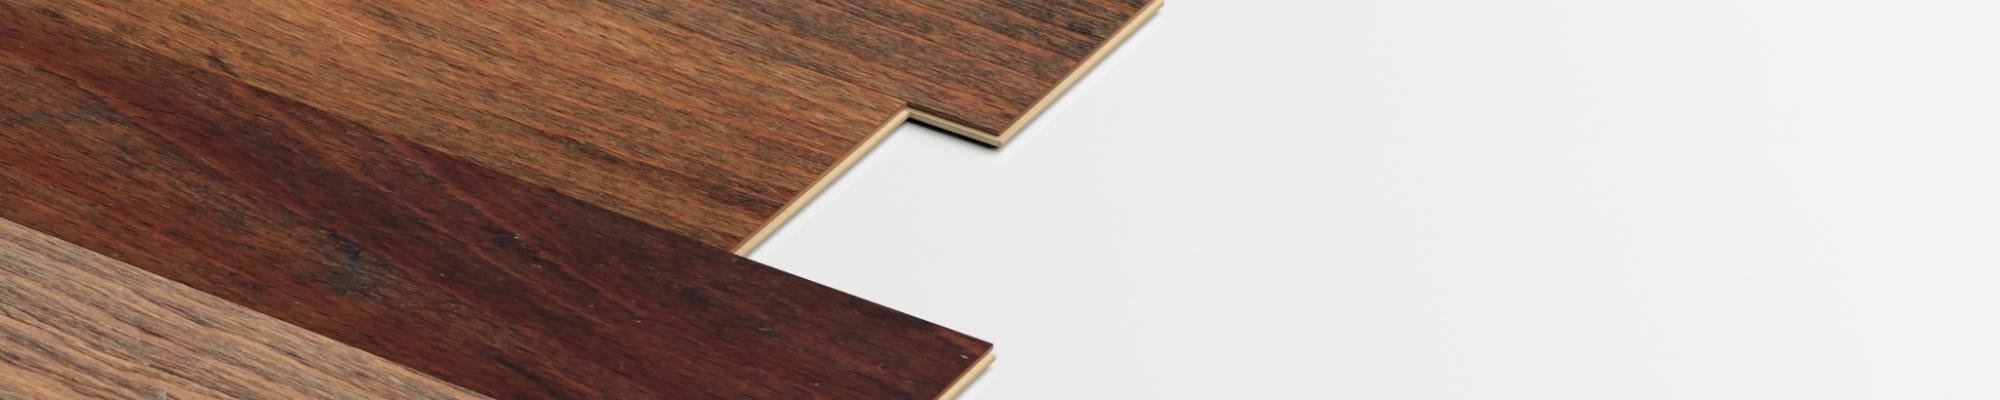 Different types of hardwood flooring